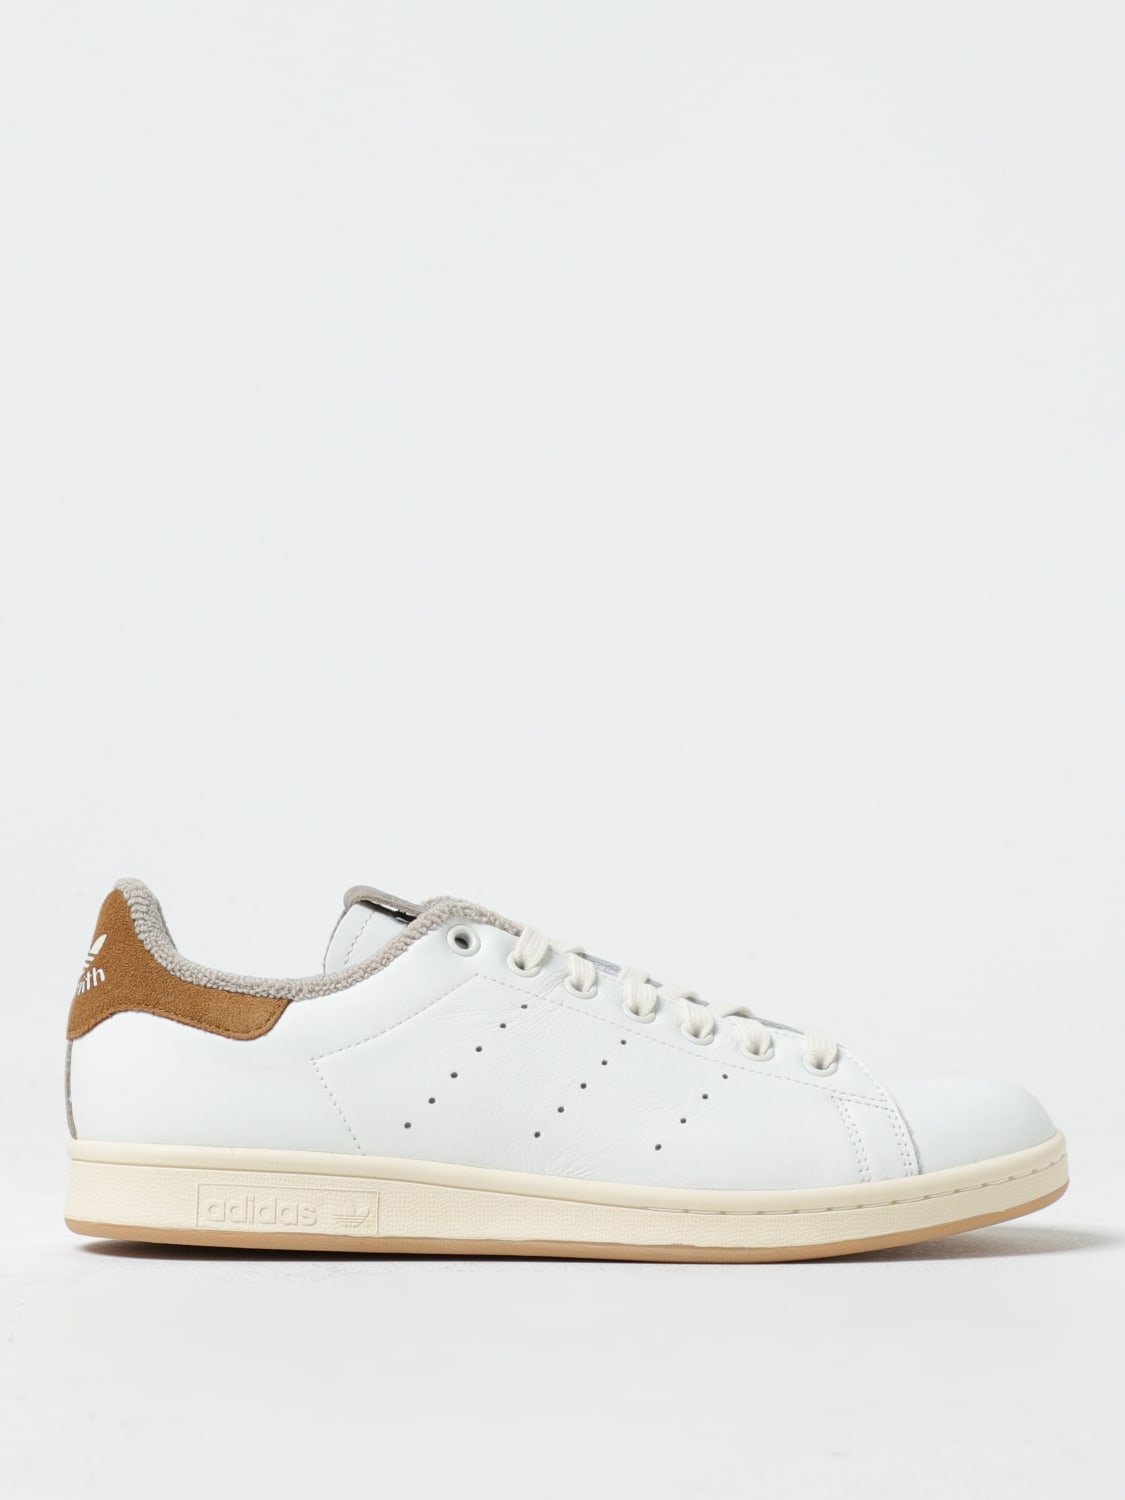 ADIDAS ORIGINALS: Stan Smith sneakers in leather - White | Adidas Originals  sneakers ID2031 online at | Sneaker low